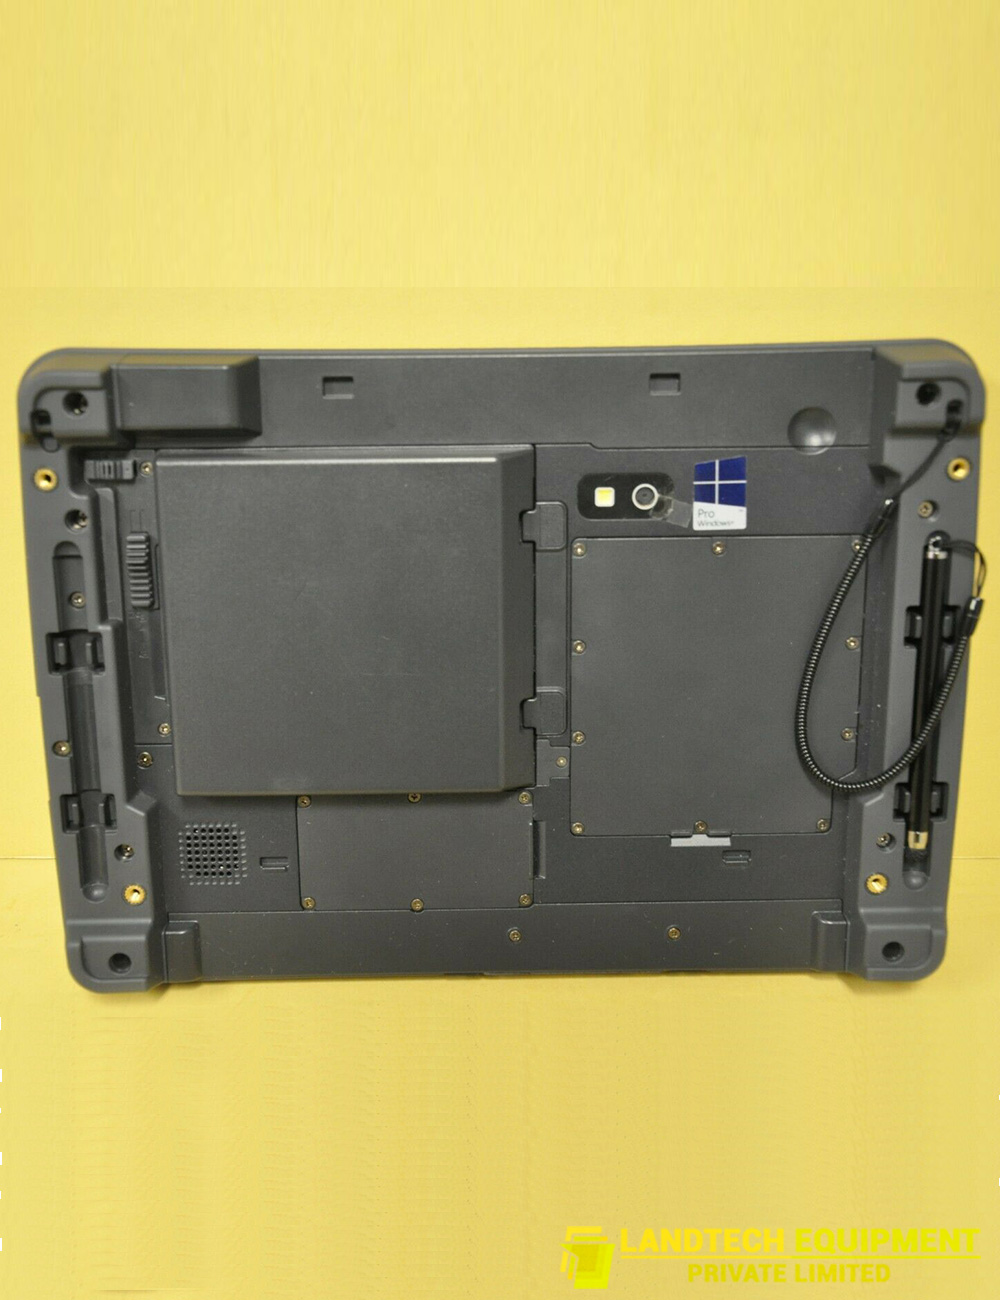 Hilti-PS-1000-X-Scan-PSA-200-Tablet.jpg